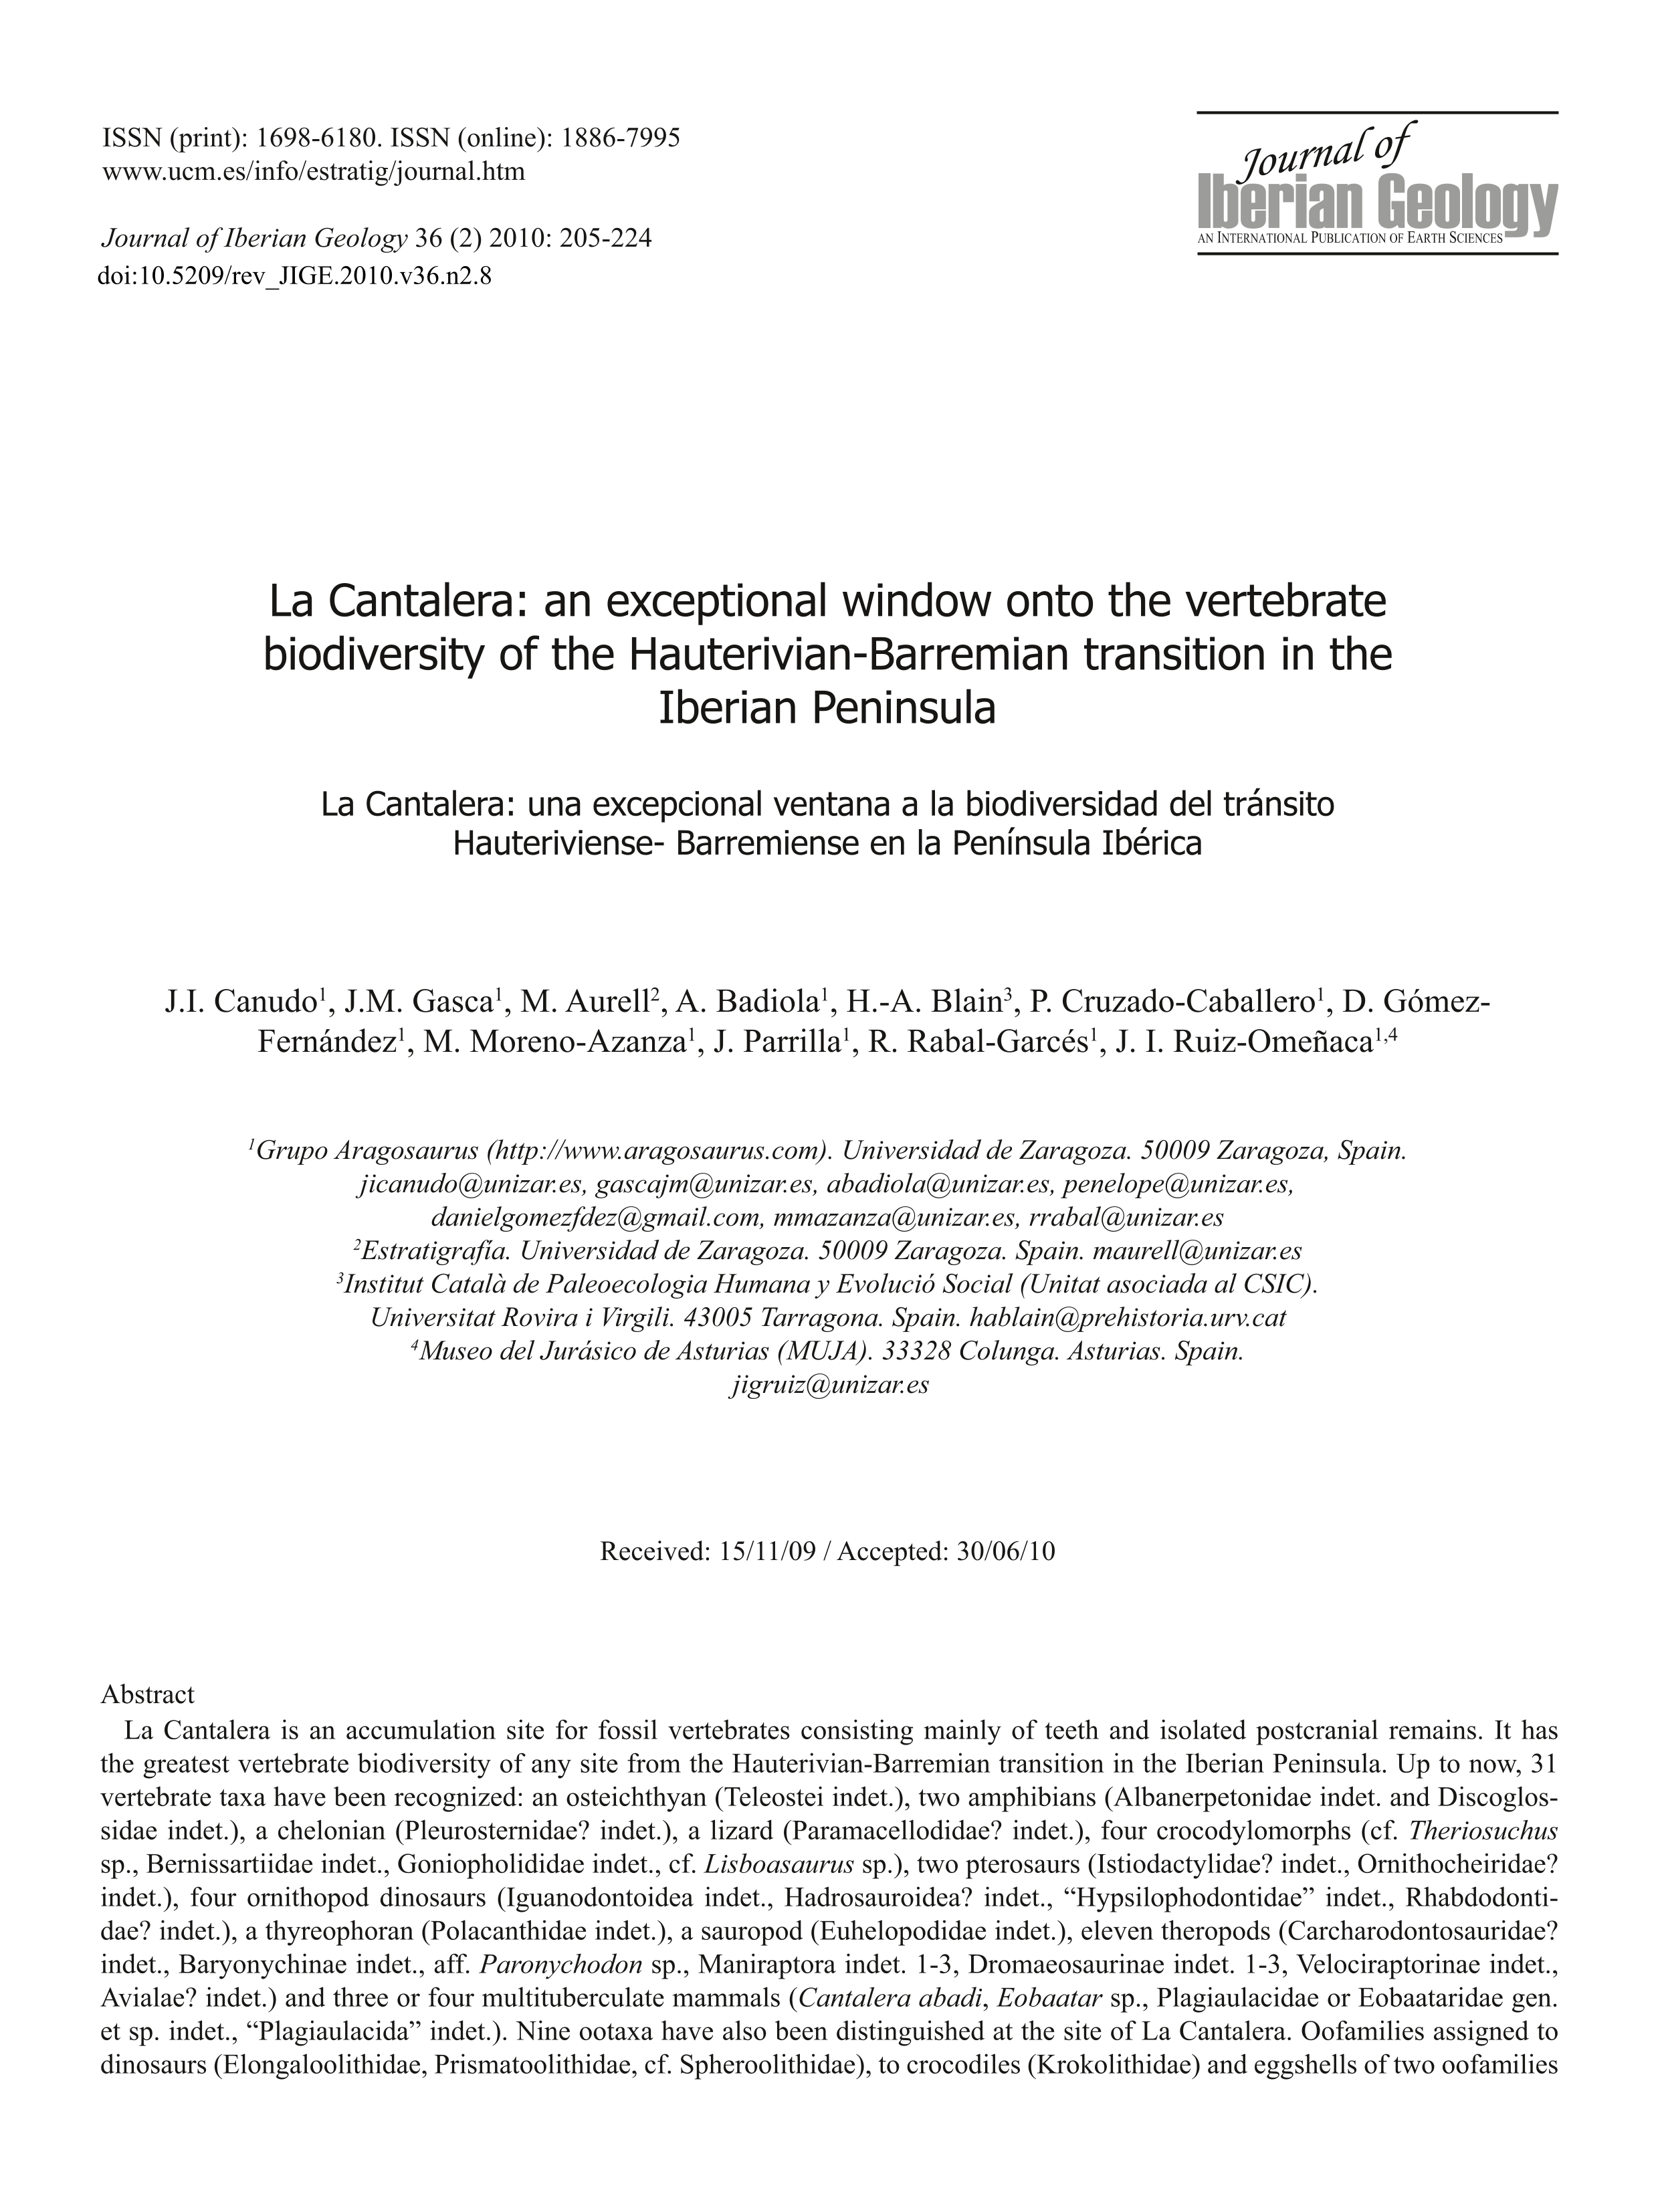 La Cantalera: an exceptional window onto the vertebrate biodiversity of the Hauterivian-Barremian transition in the Iberian Peninsula.